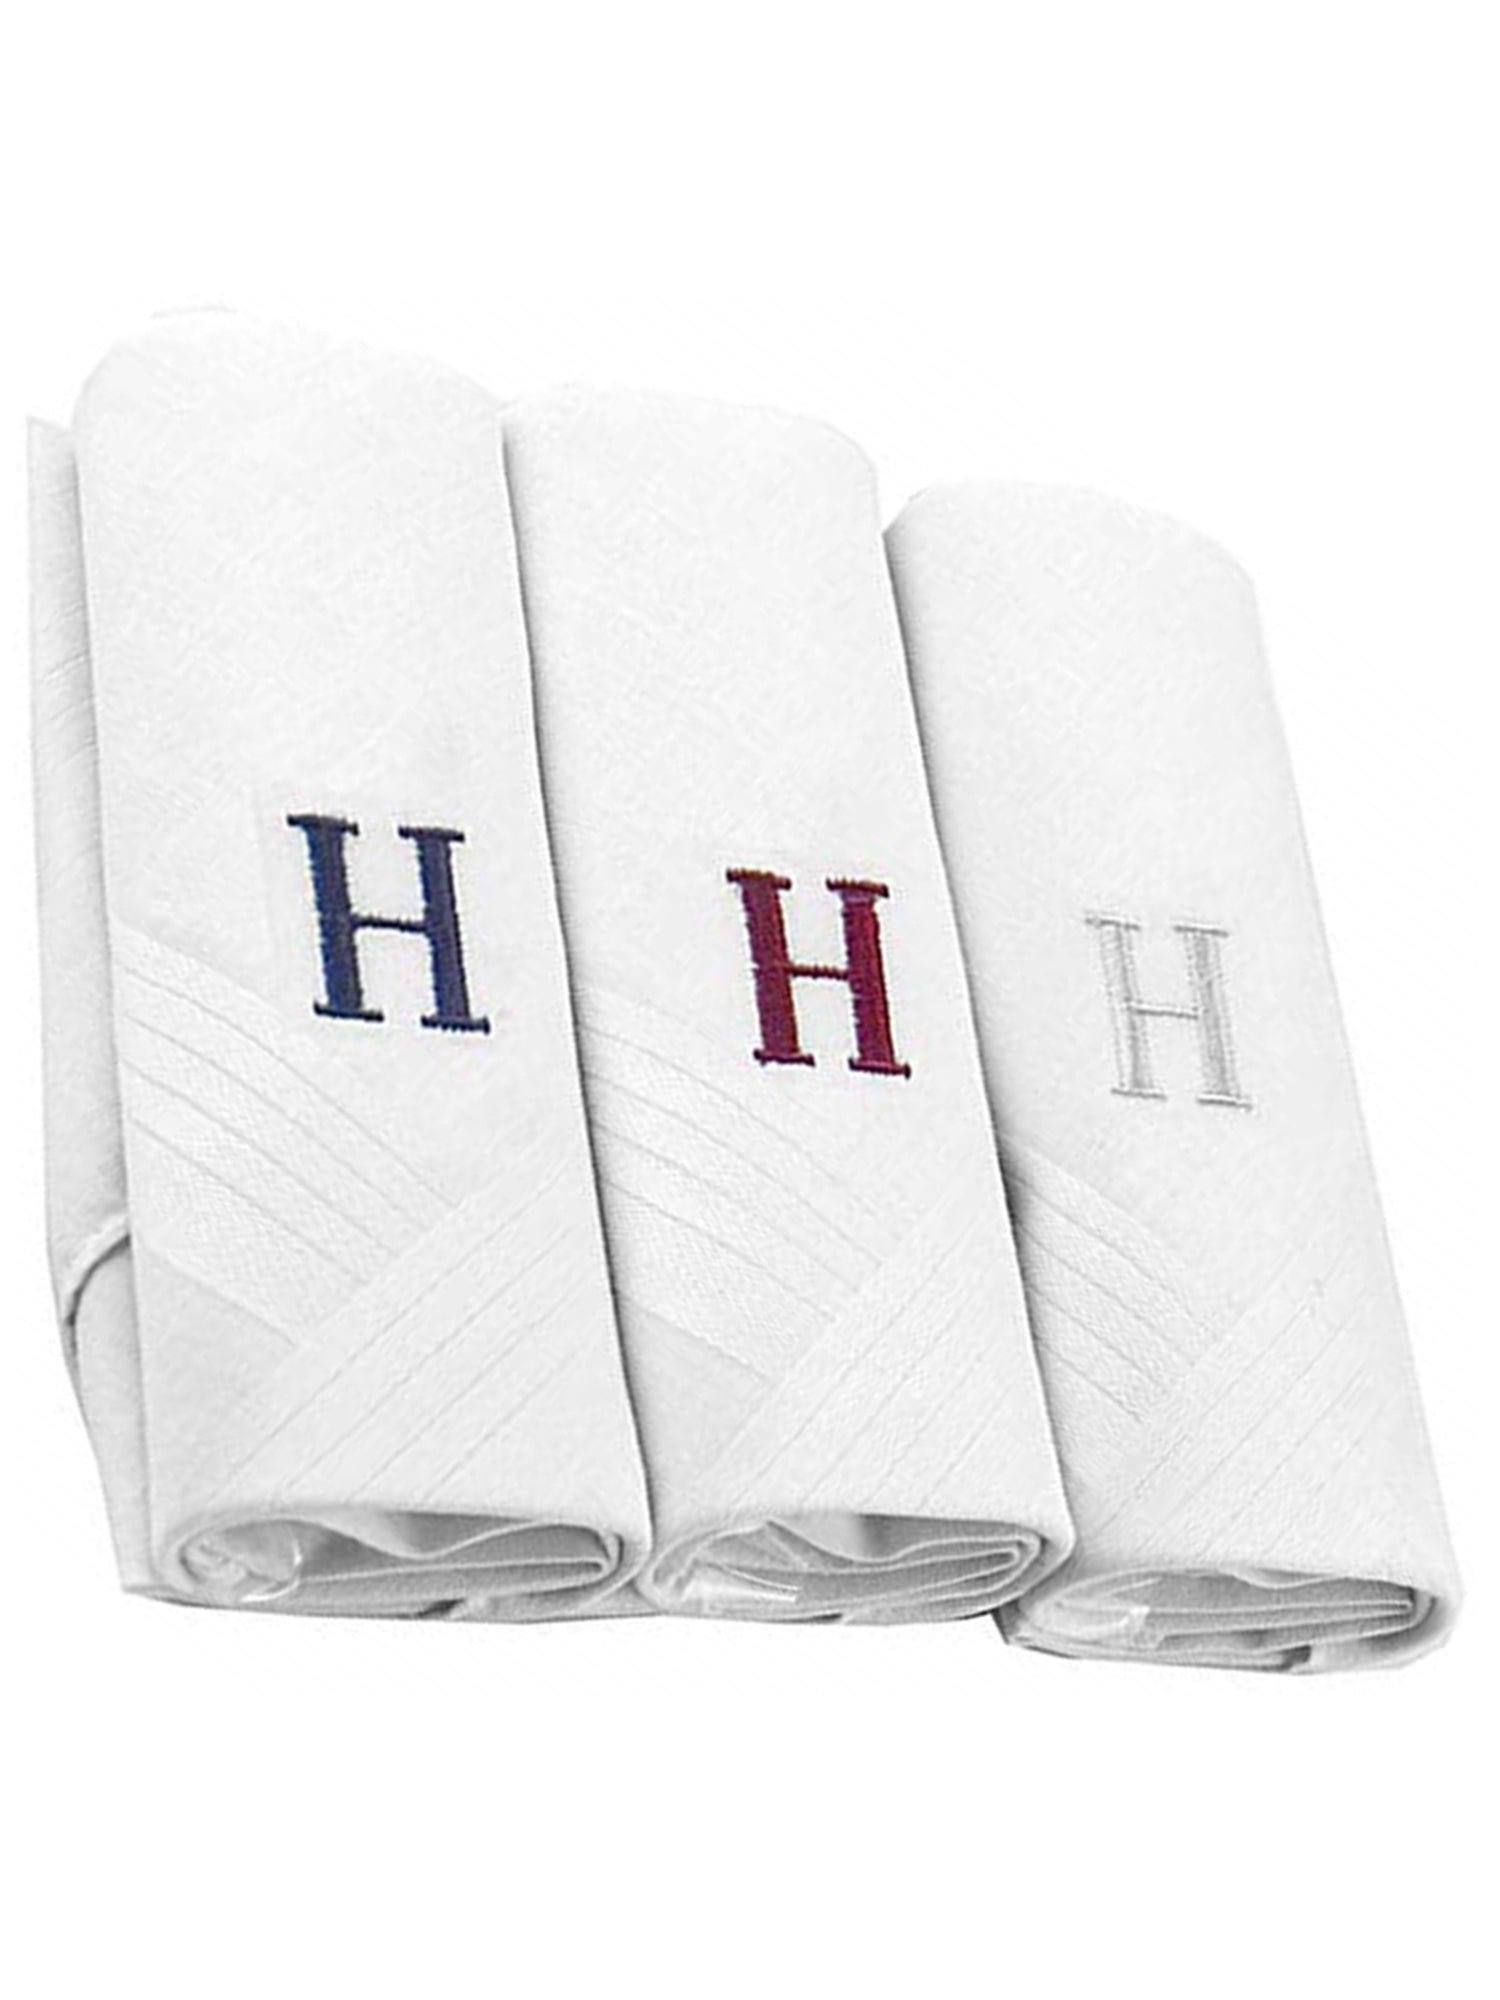 Men's Cotton Monogrammed Handkerchiefs Initial Letter Hanky Handkerchiefs TheDapperTie White H 2 x 3 Pack  